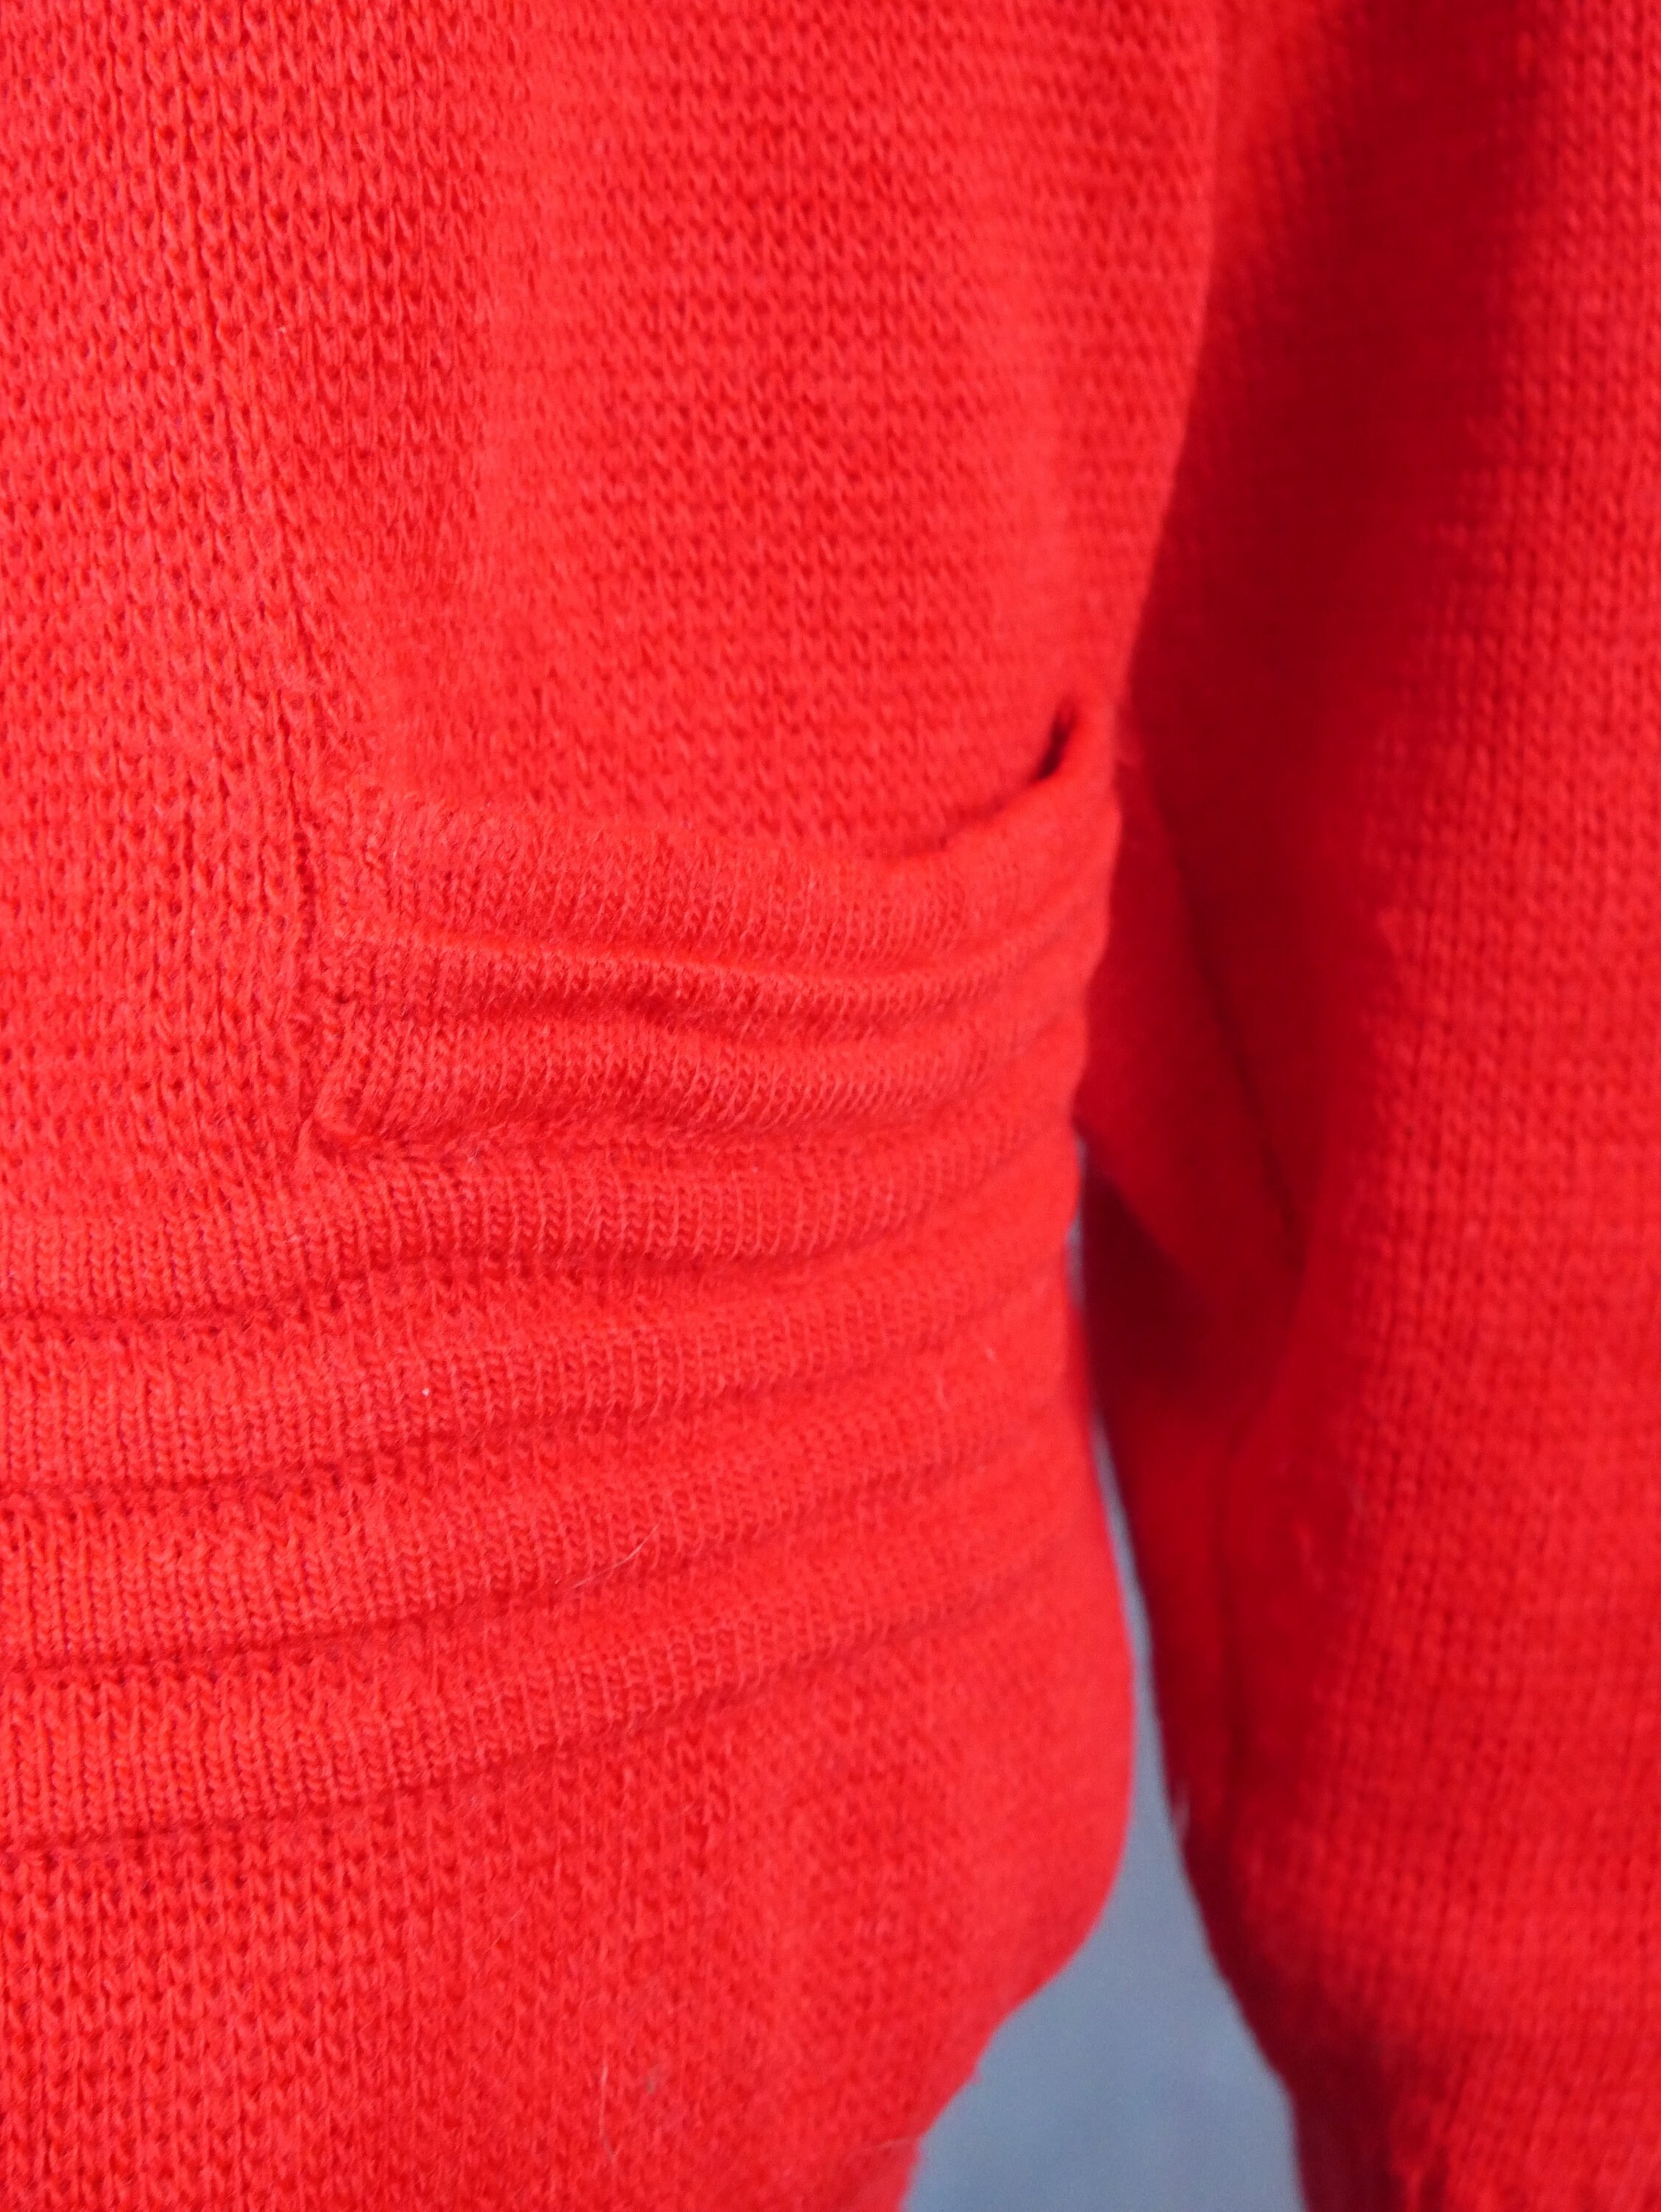 Red Cardigan Sweater Italian Vintage Retro Knit Menswear: | Etsy